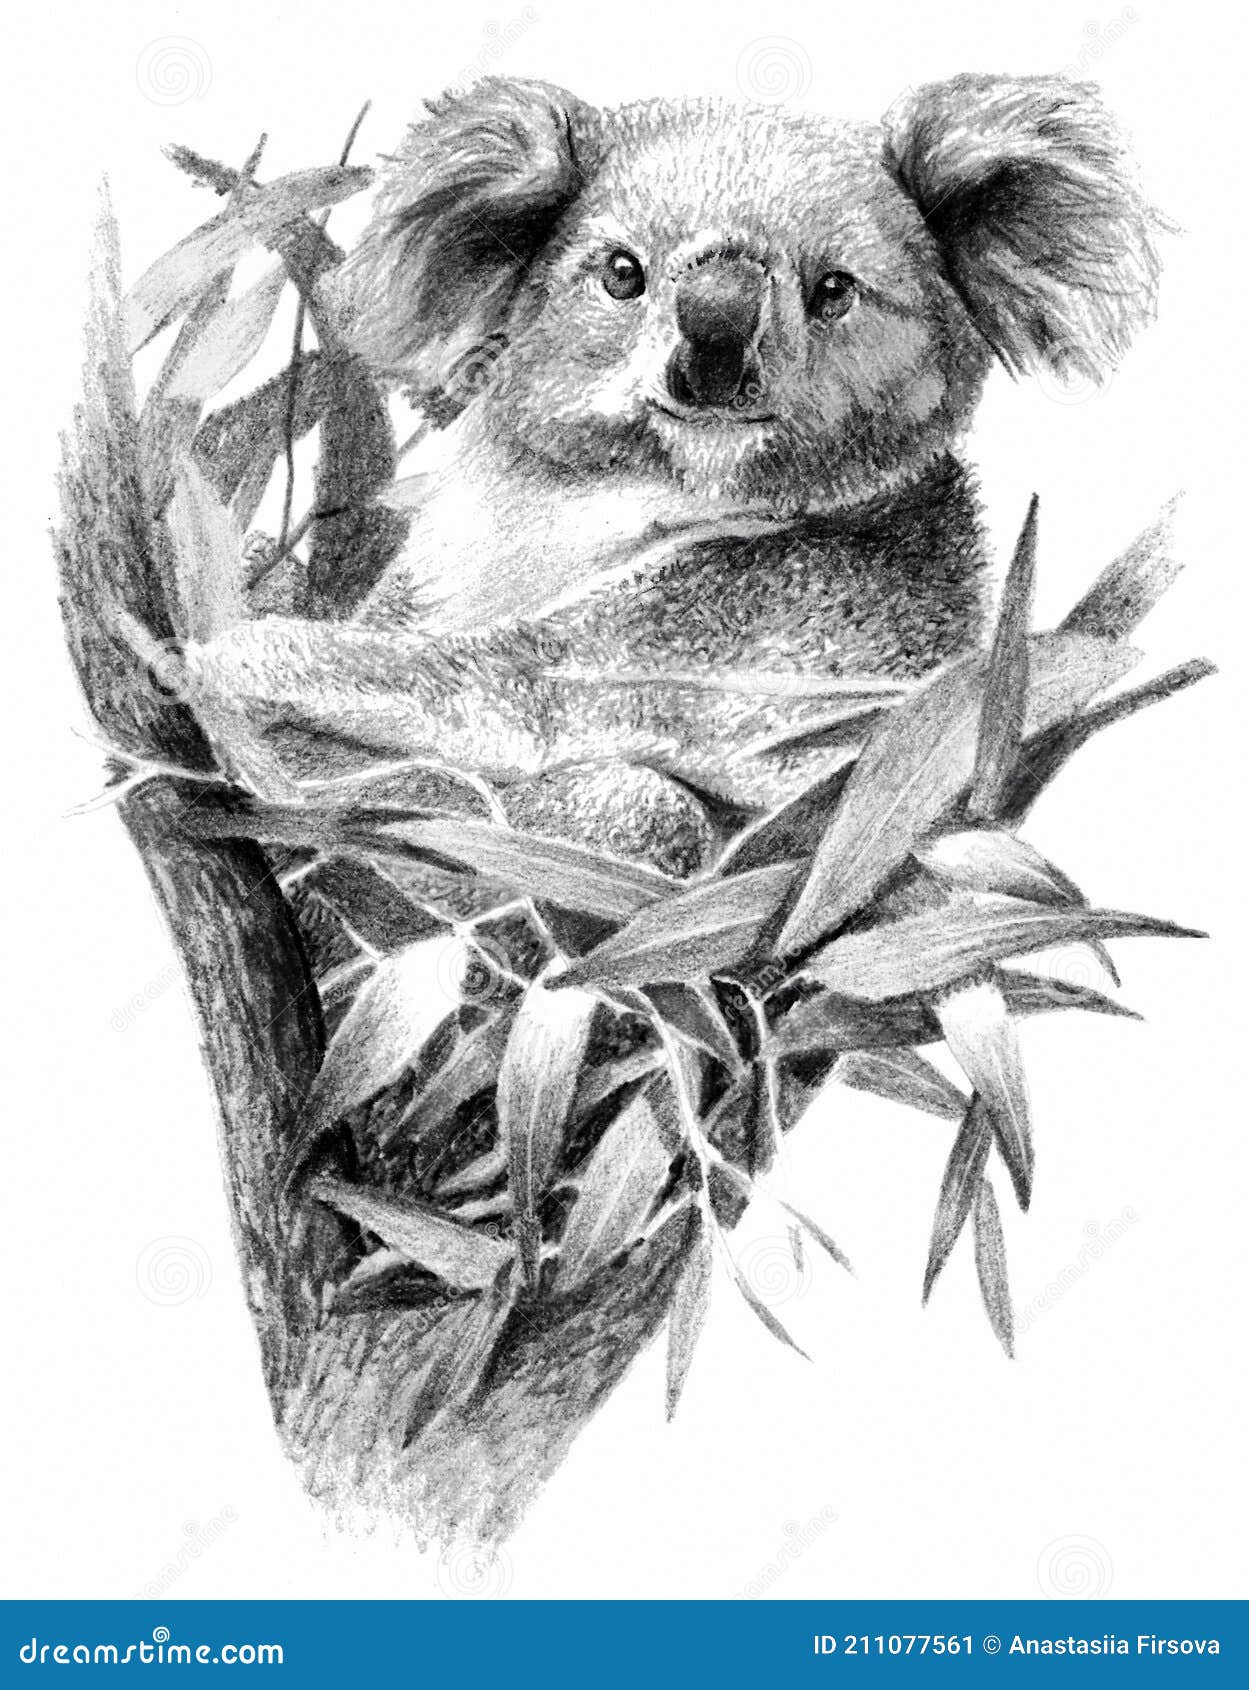 realistic koala drawing Koala Bear Isolated on White Background. Realistic Detailed Pencil